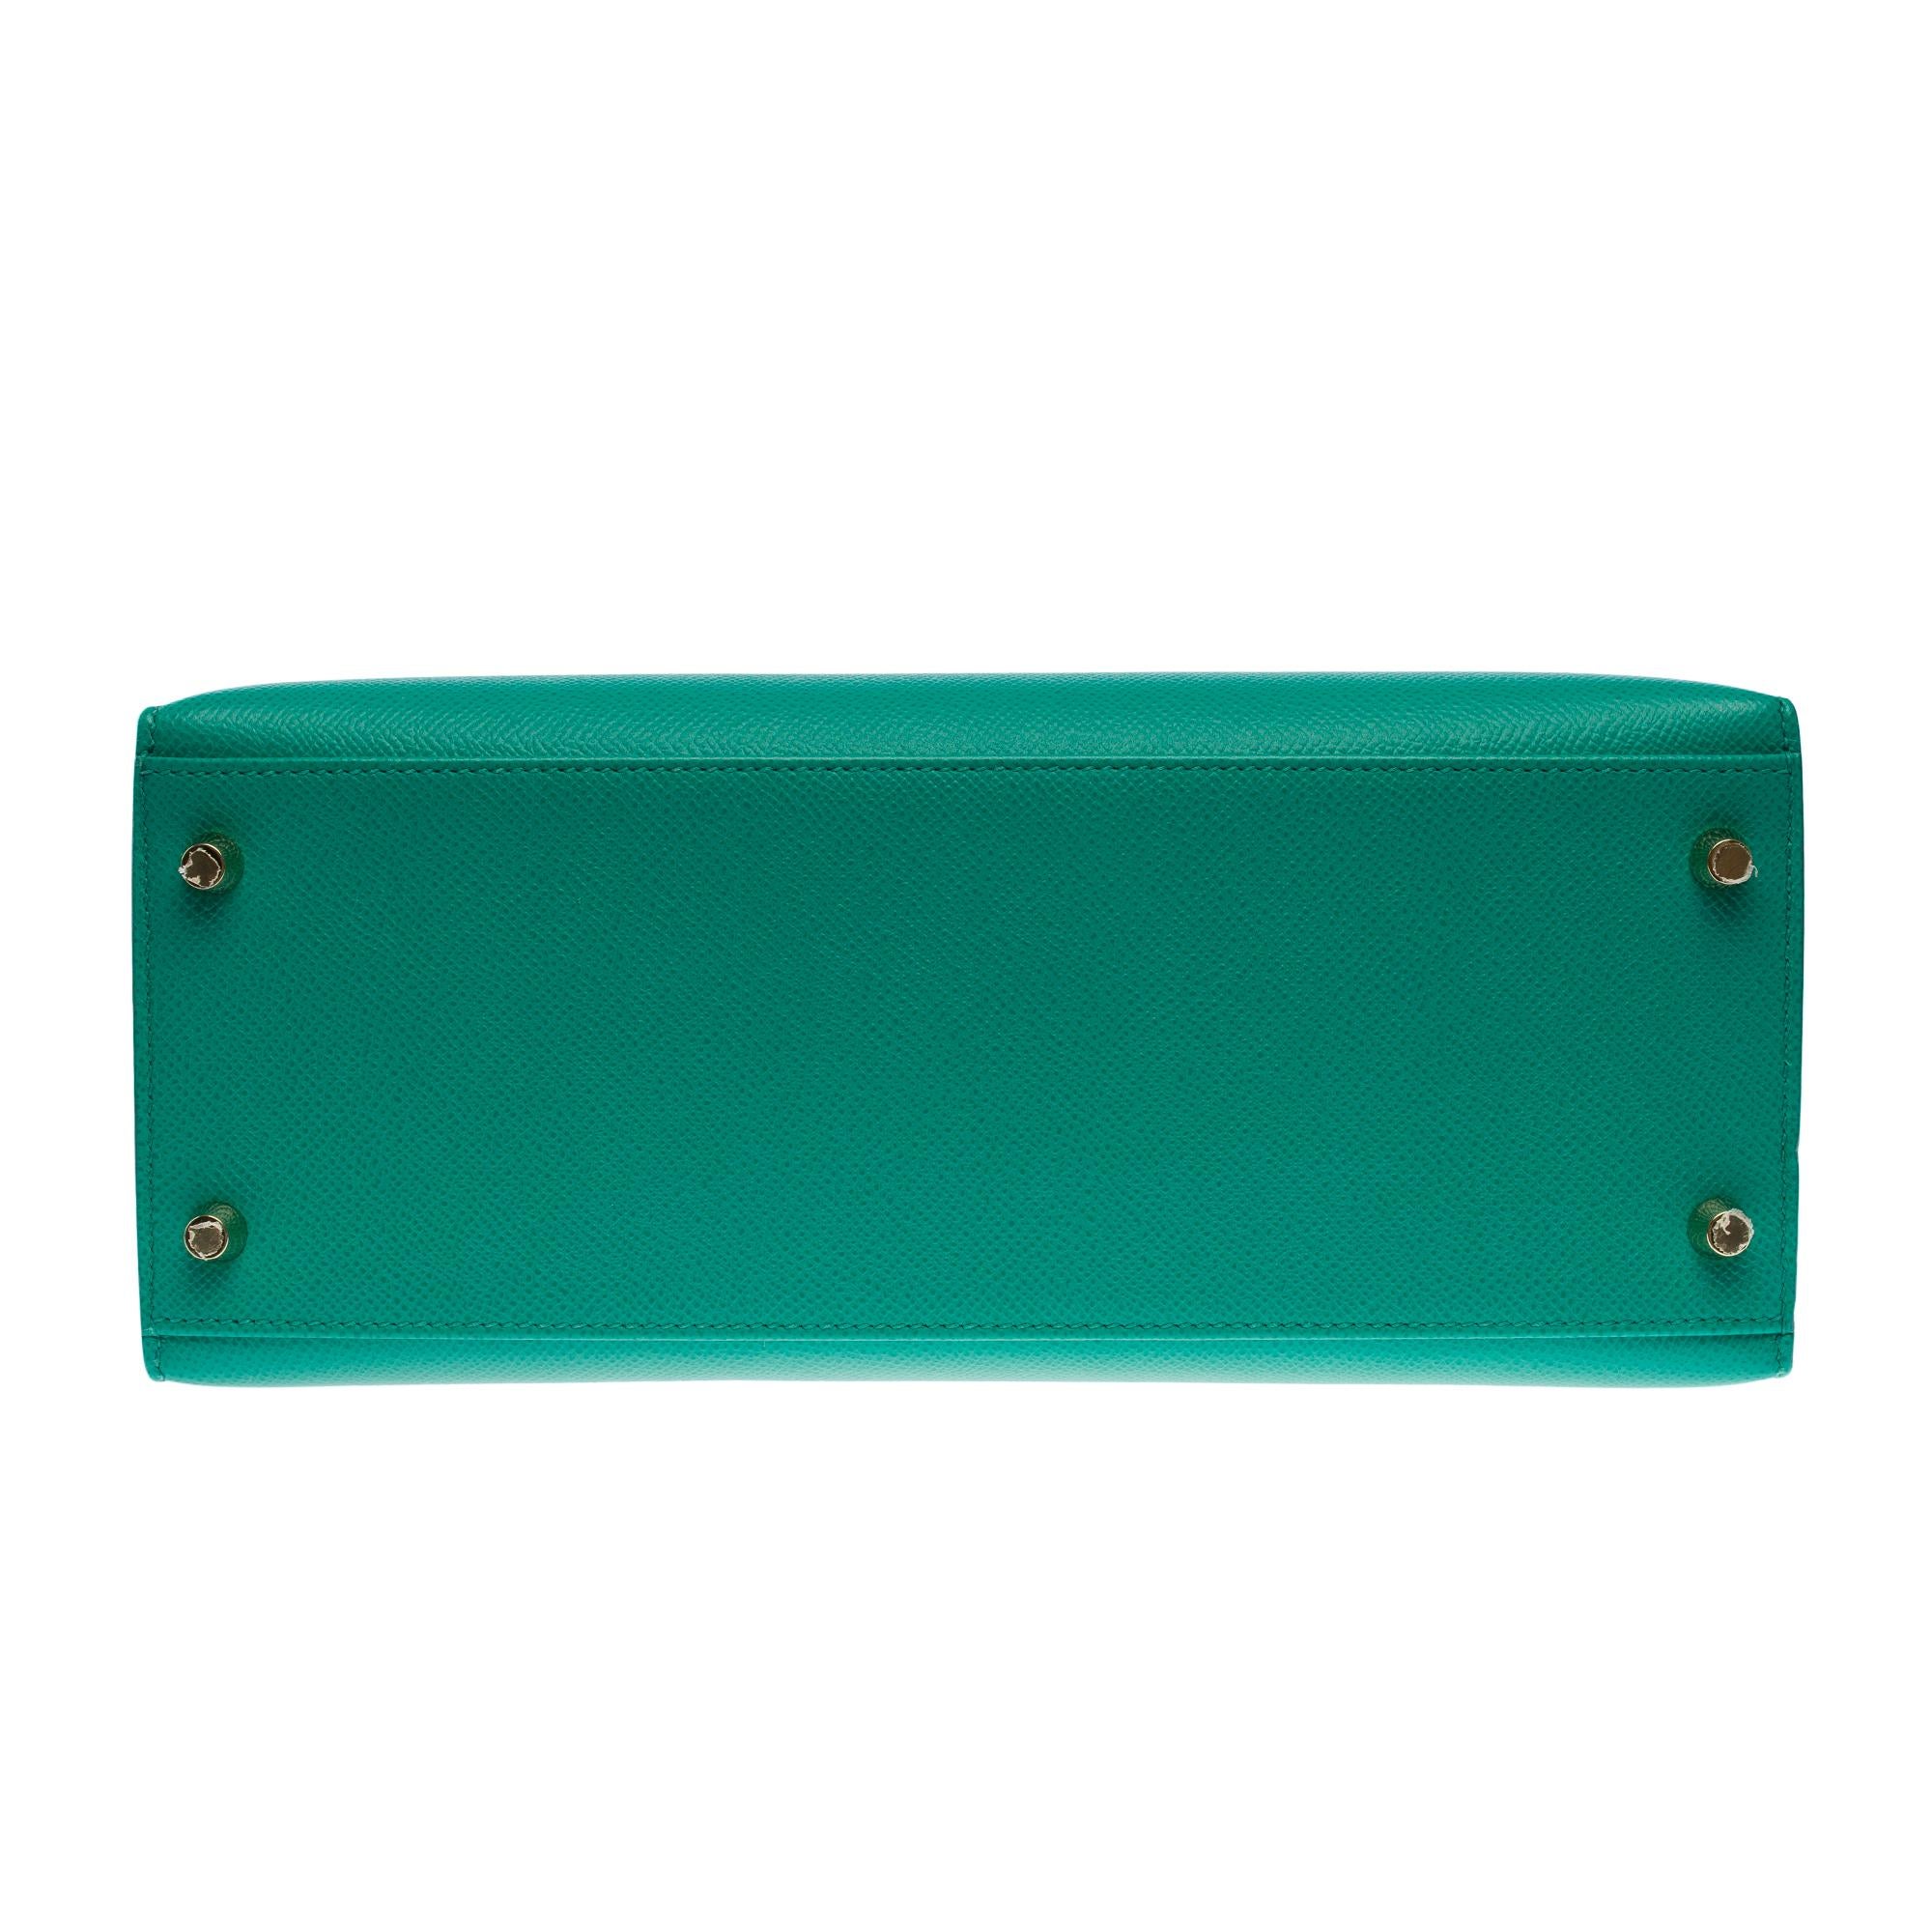 New Hermès Kelly 28 sellier handbag strap in Vert Jade Epsom leather, GHW For Sale 7